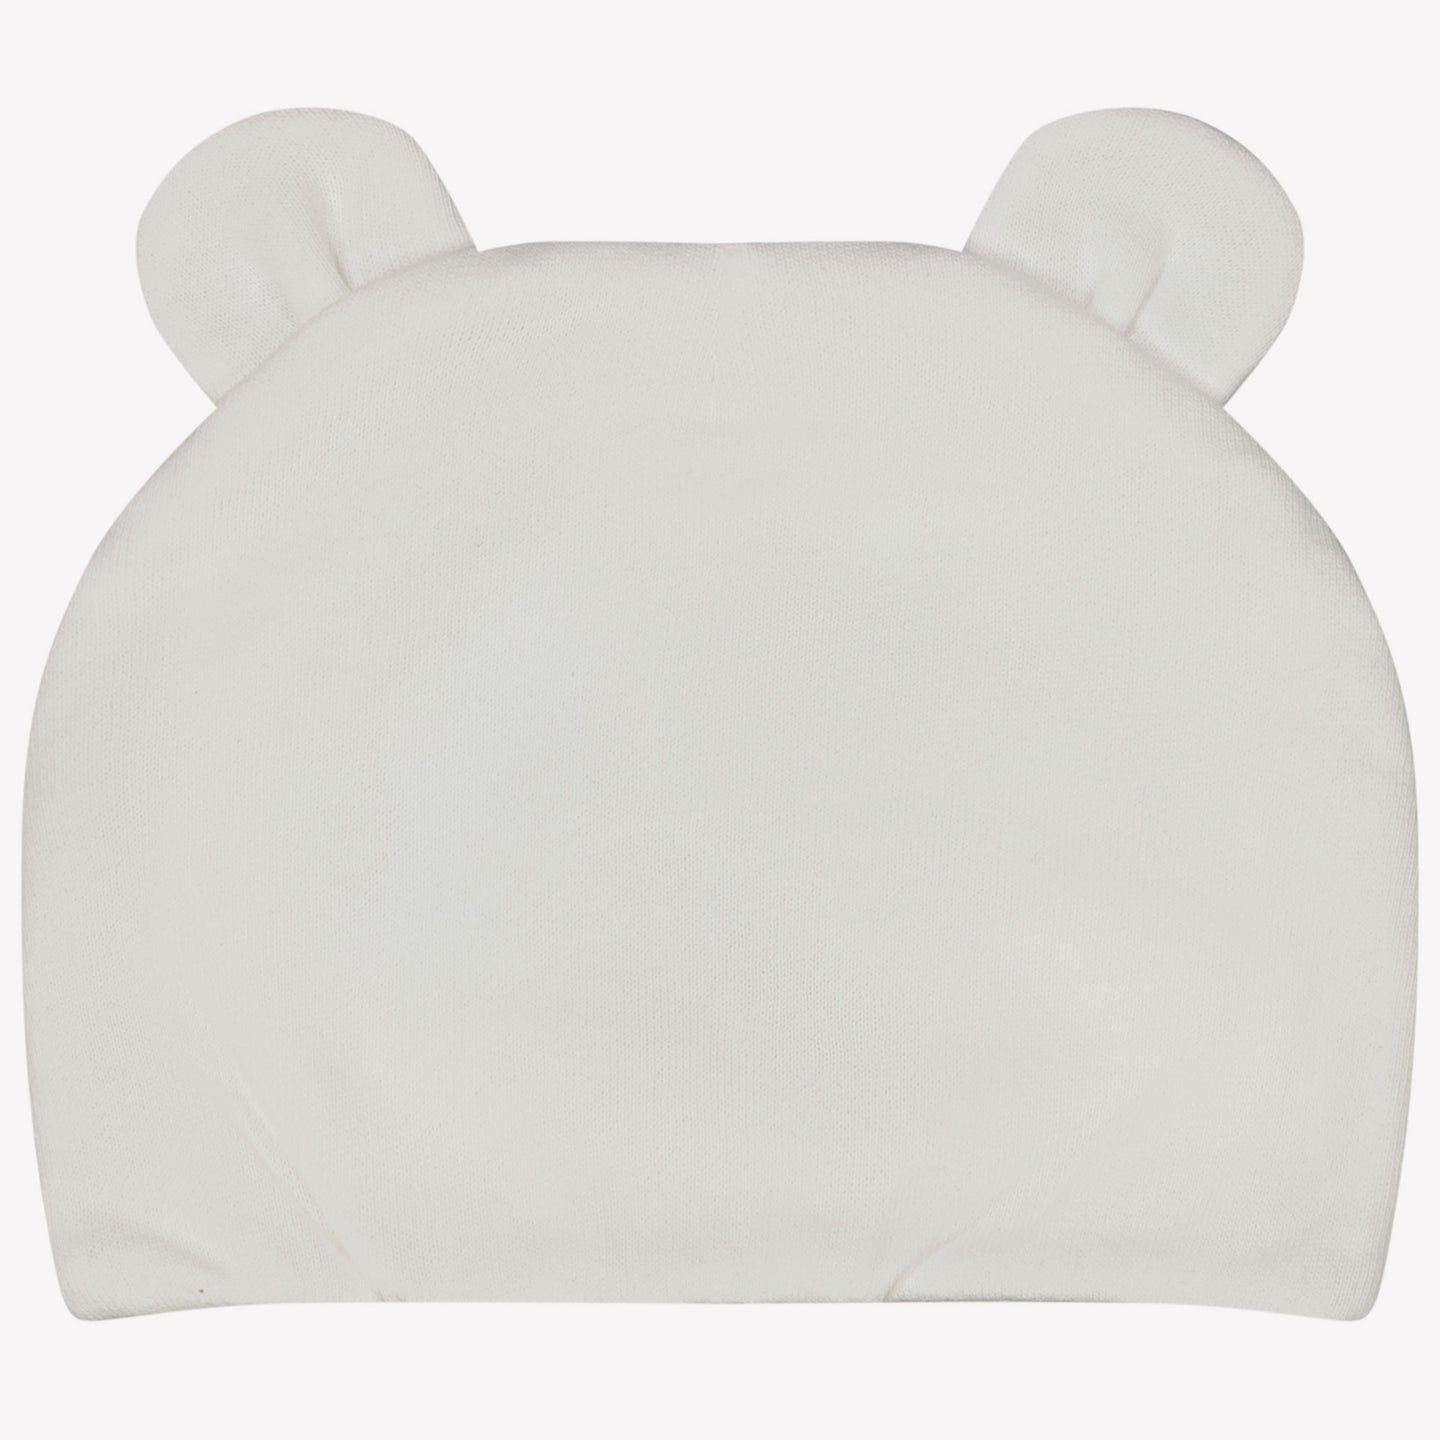 Moschino Baby Unisex Hat Off White